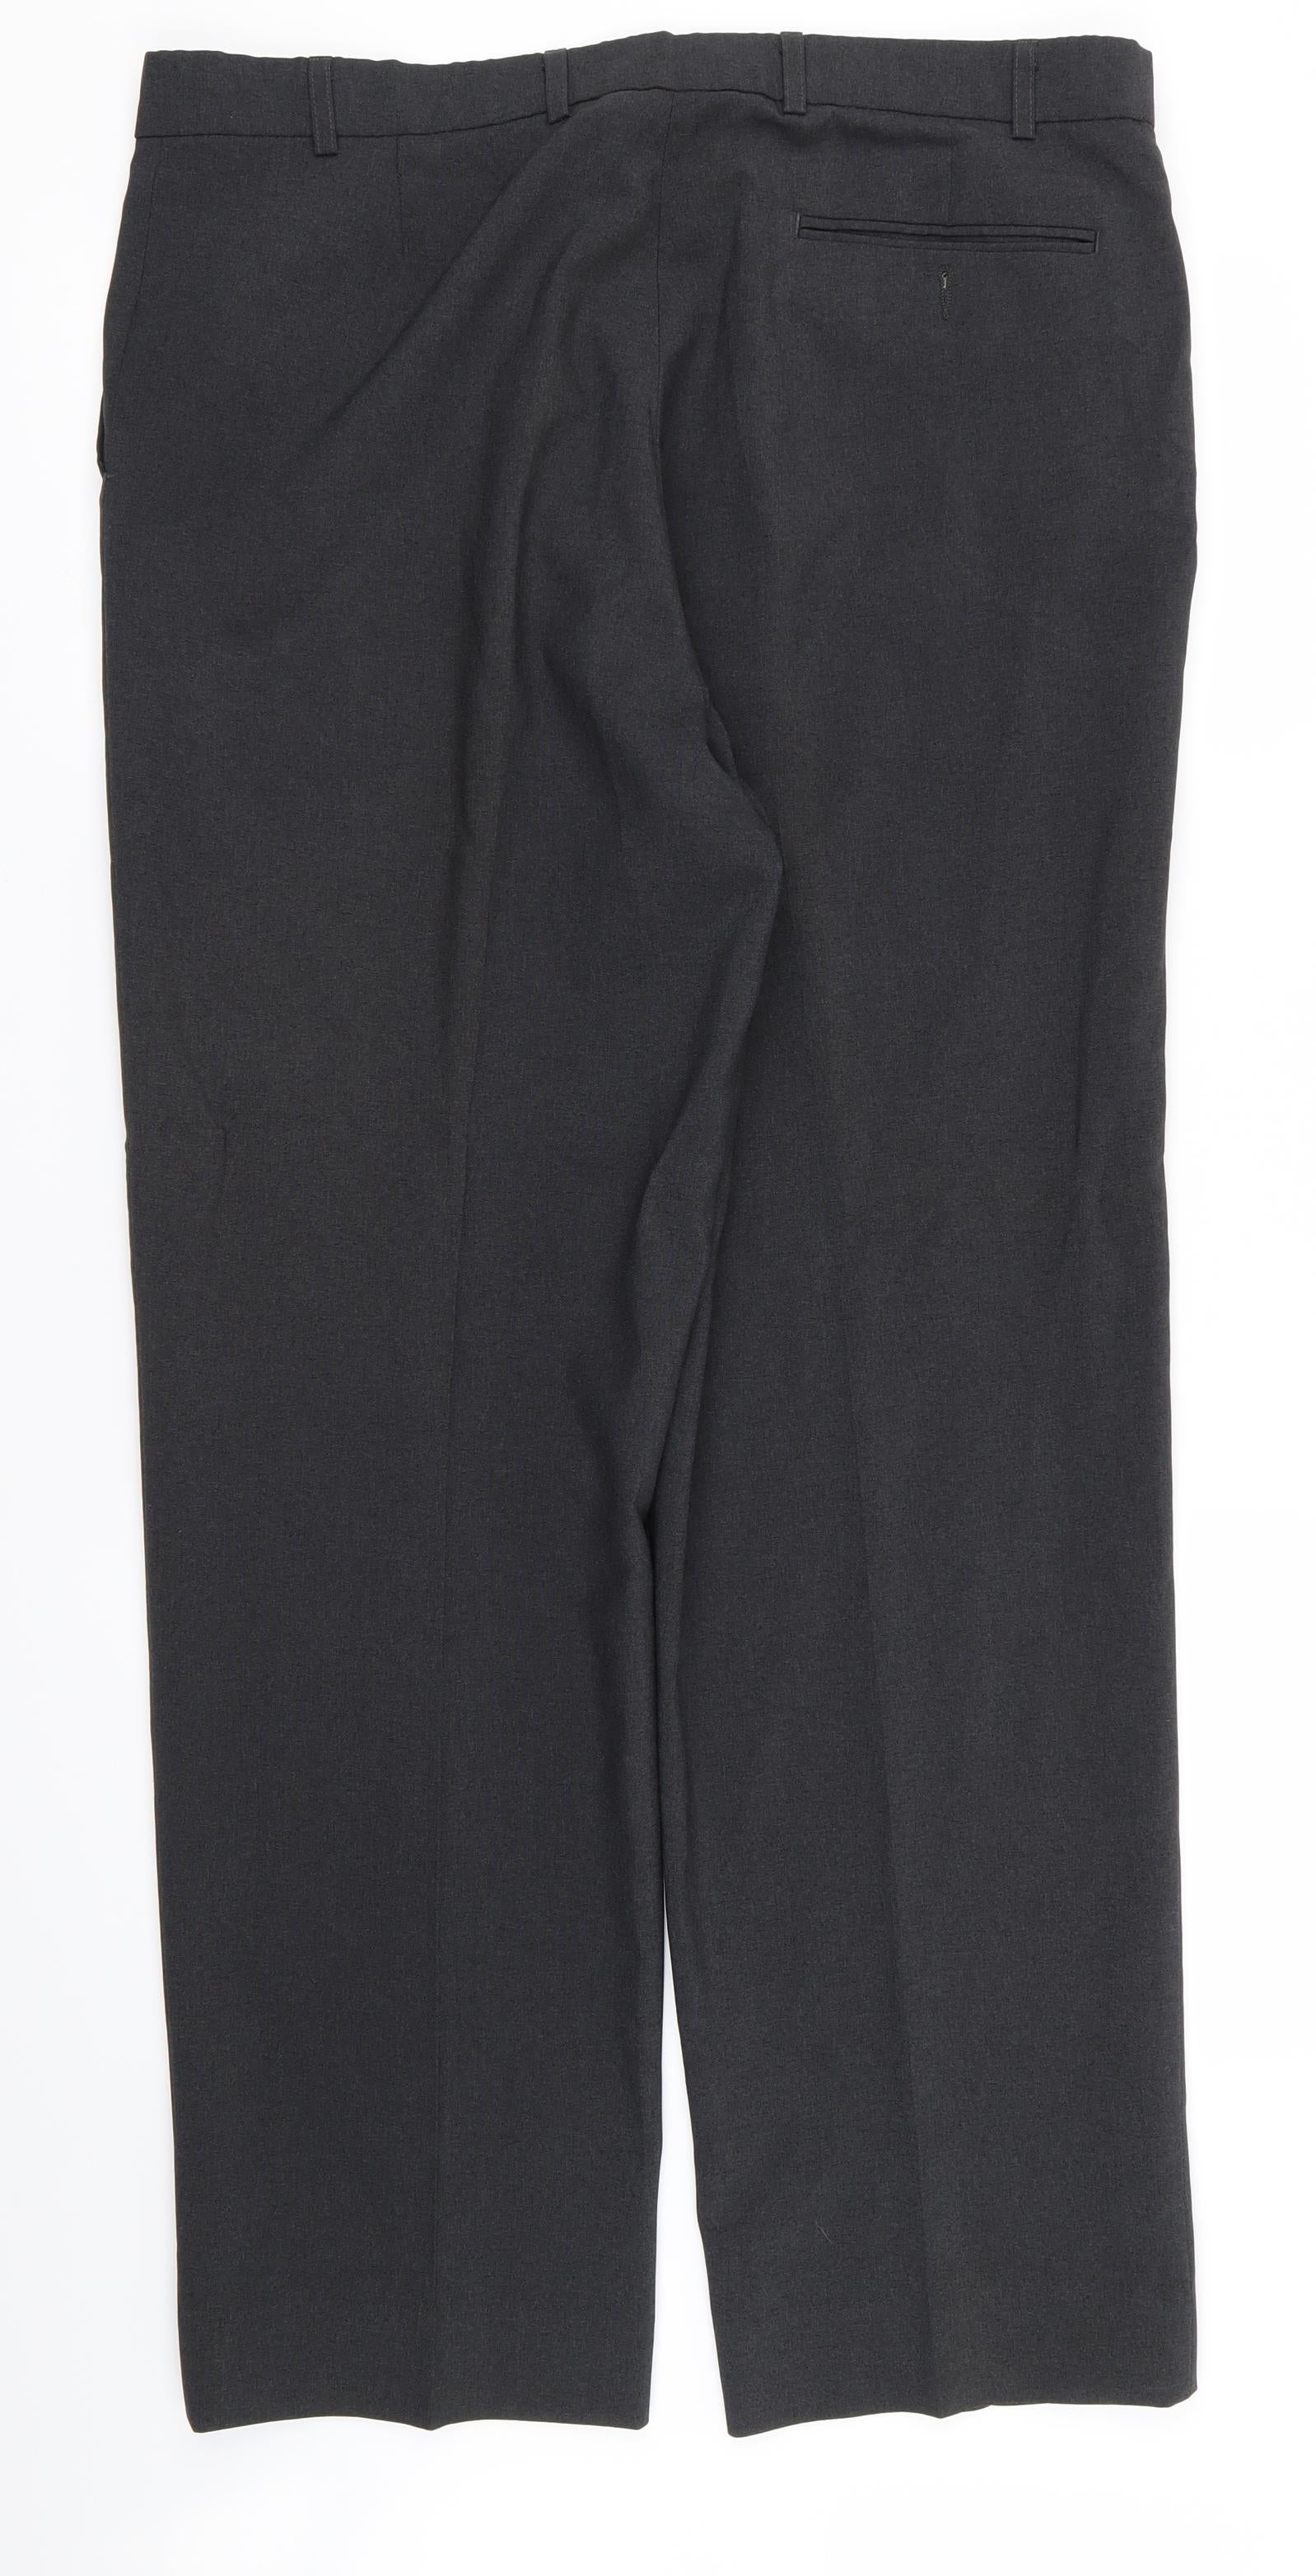 Ladies Black Trousers Size 20 Long GEORGE OF ASDA Smart Front Zip NEW NWOT  | eBay